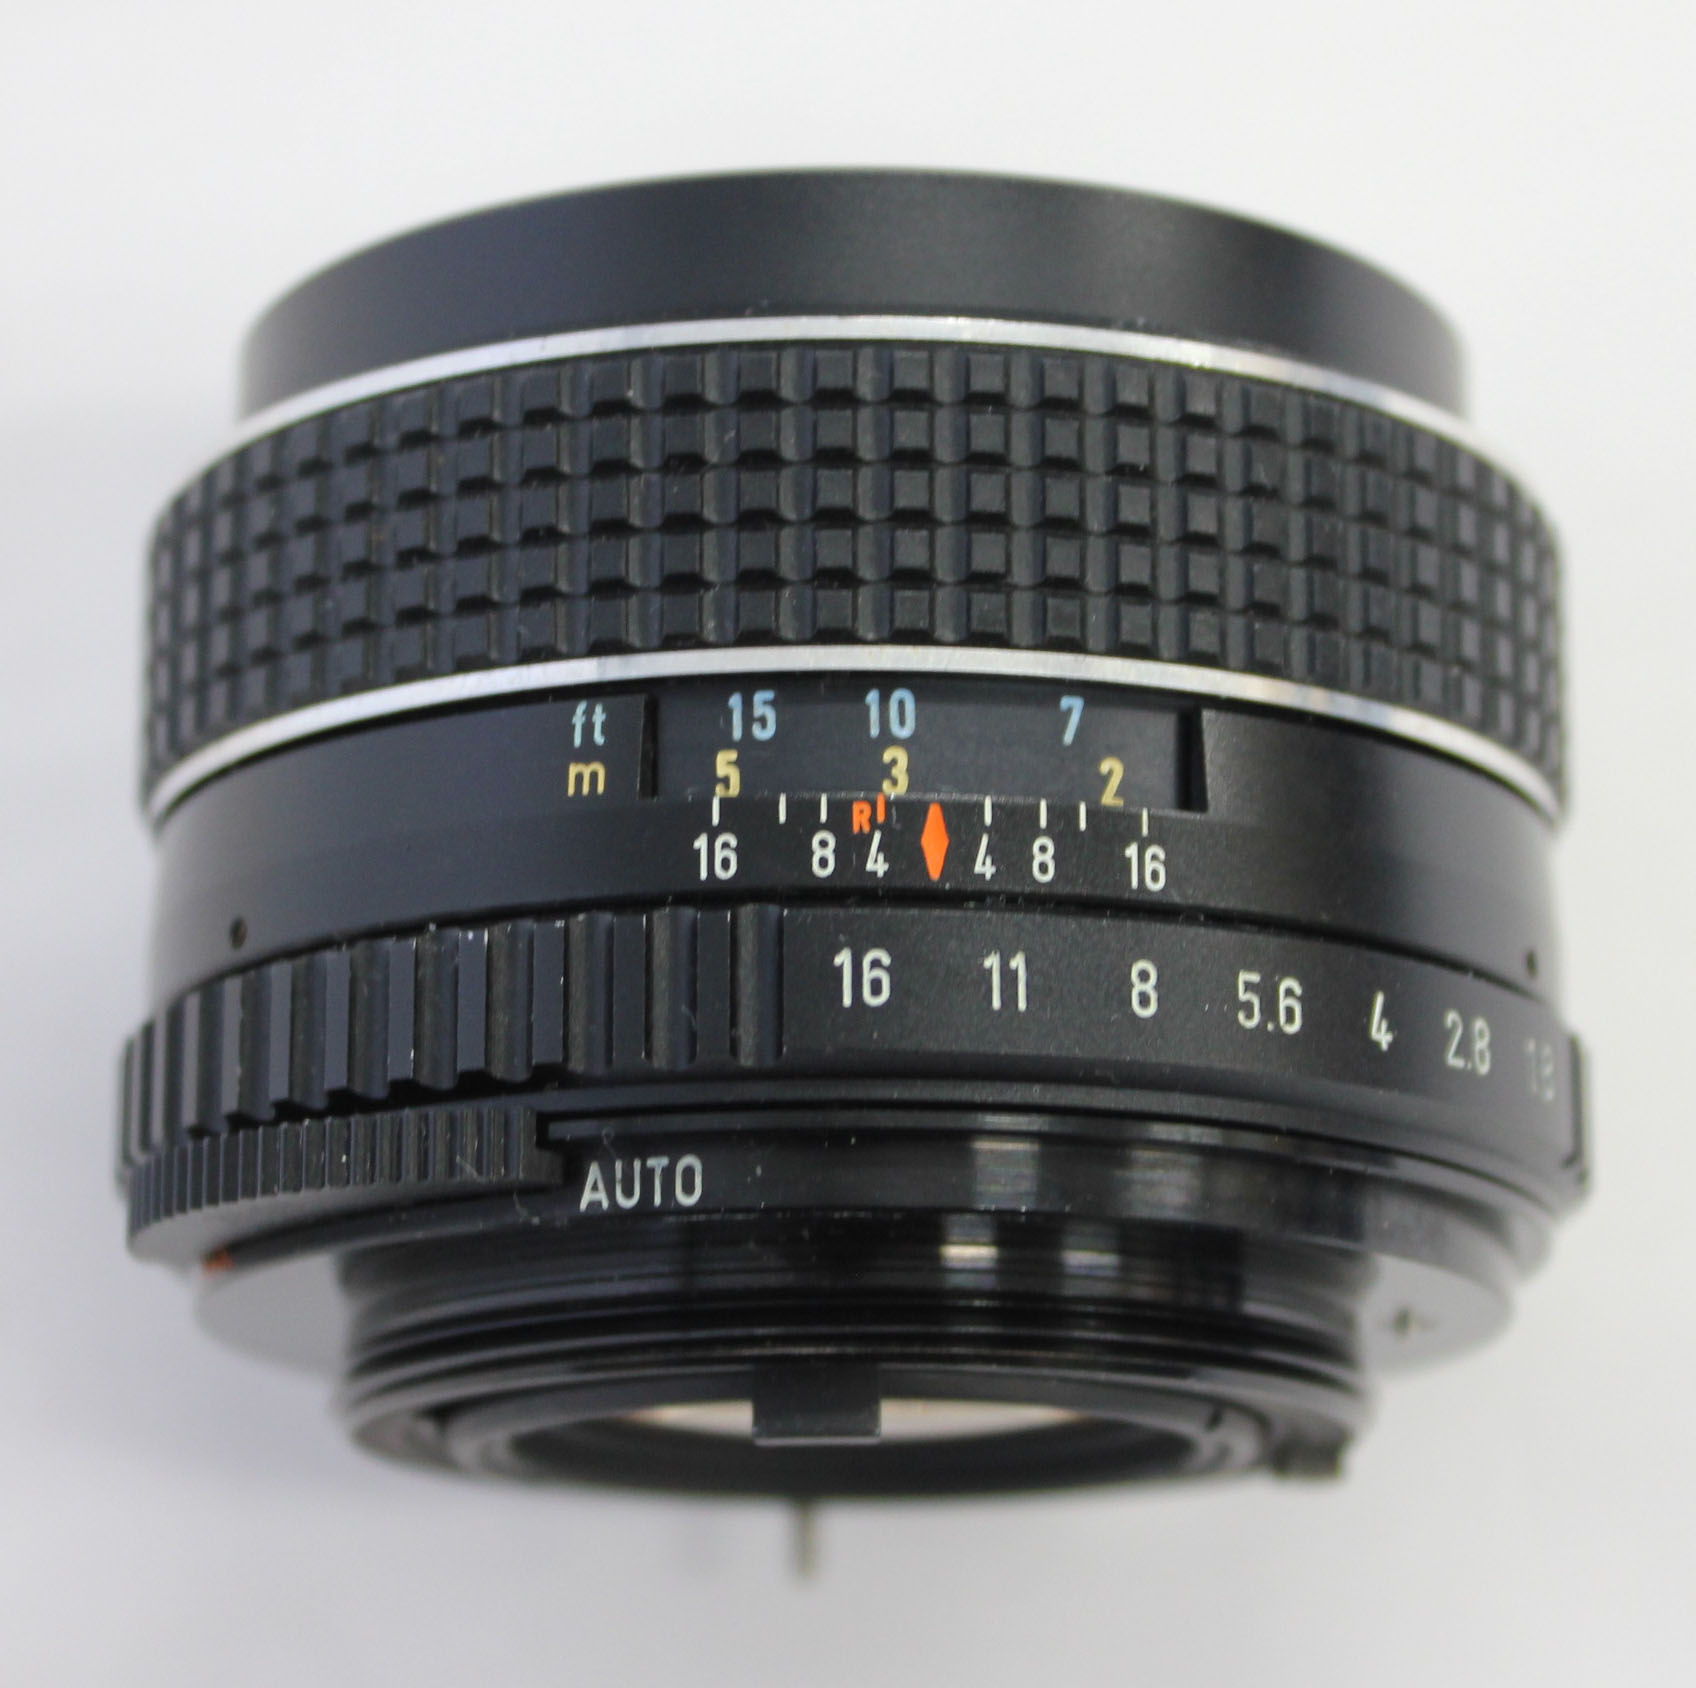 Asahi Pentax Spotmatic F SPF 35mm SLR Camera with SMC Takumar 55mm F/1.8 Lens and Case from Japan Photo 14